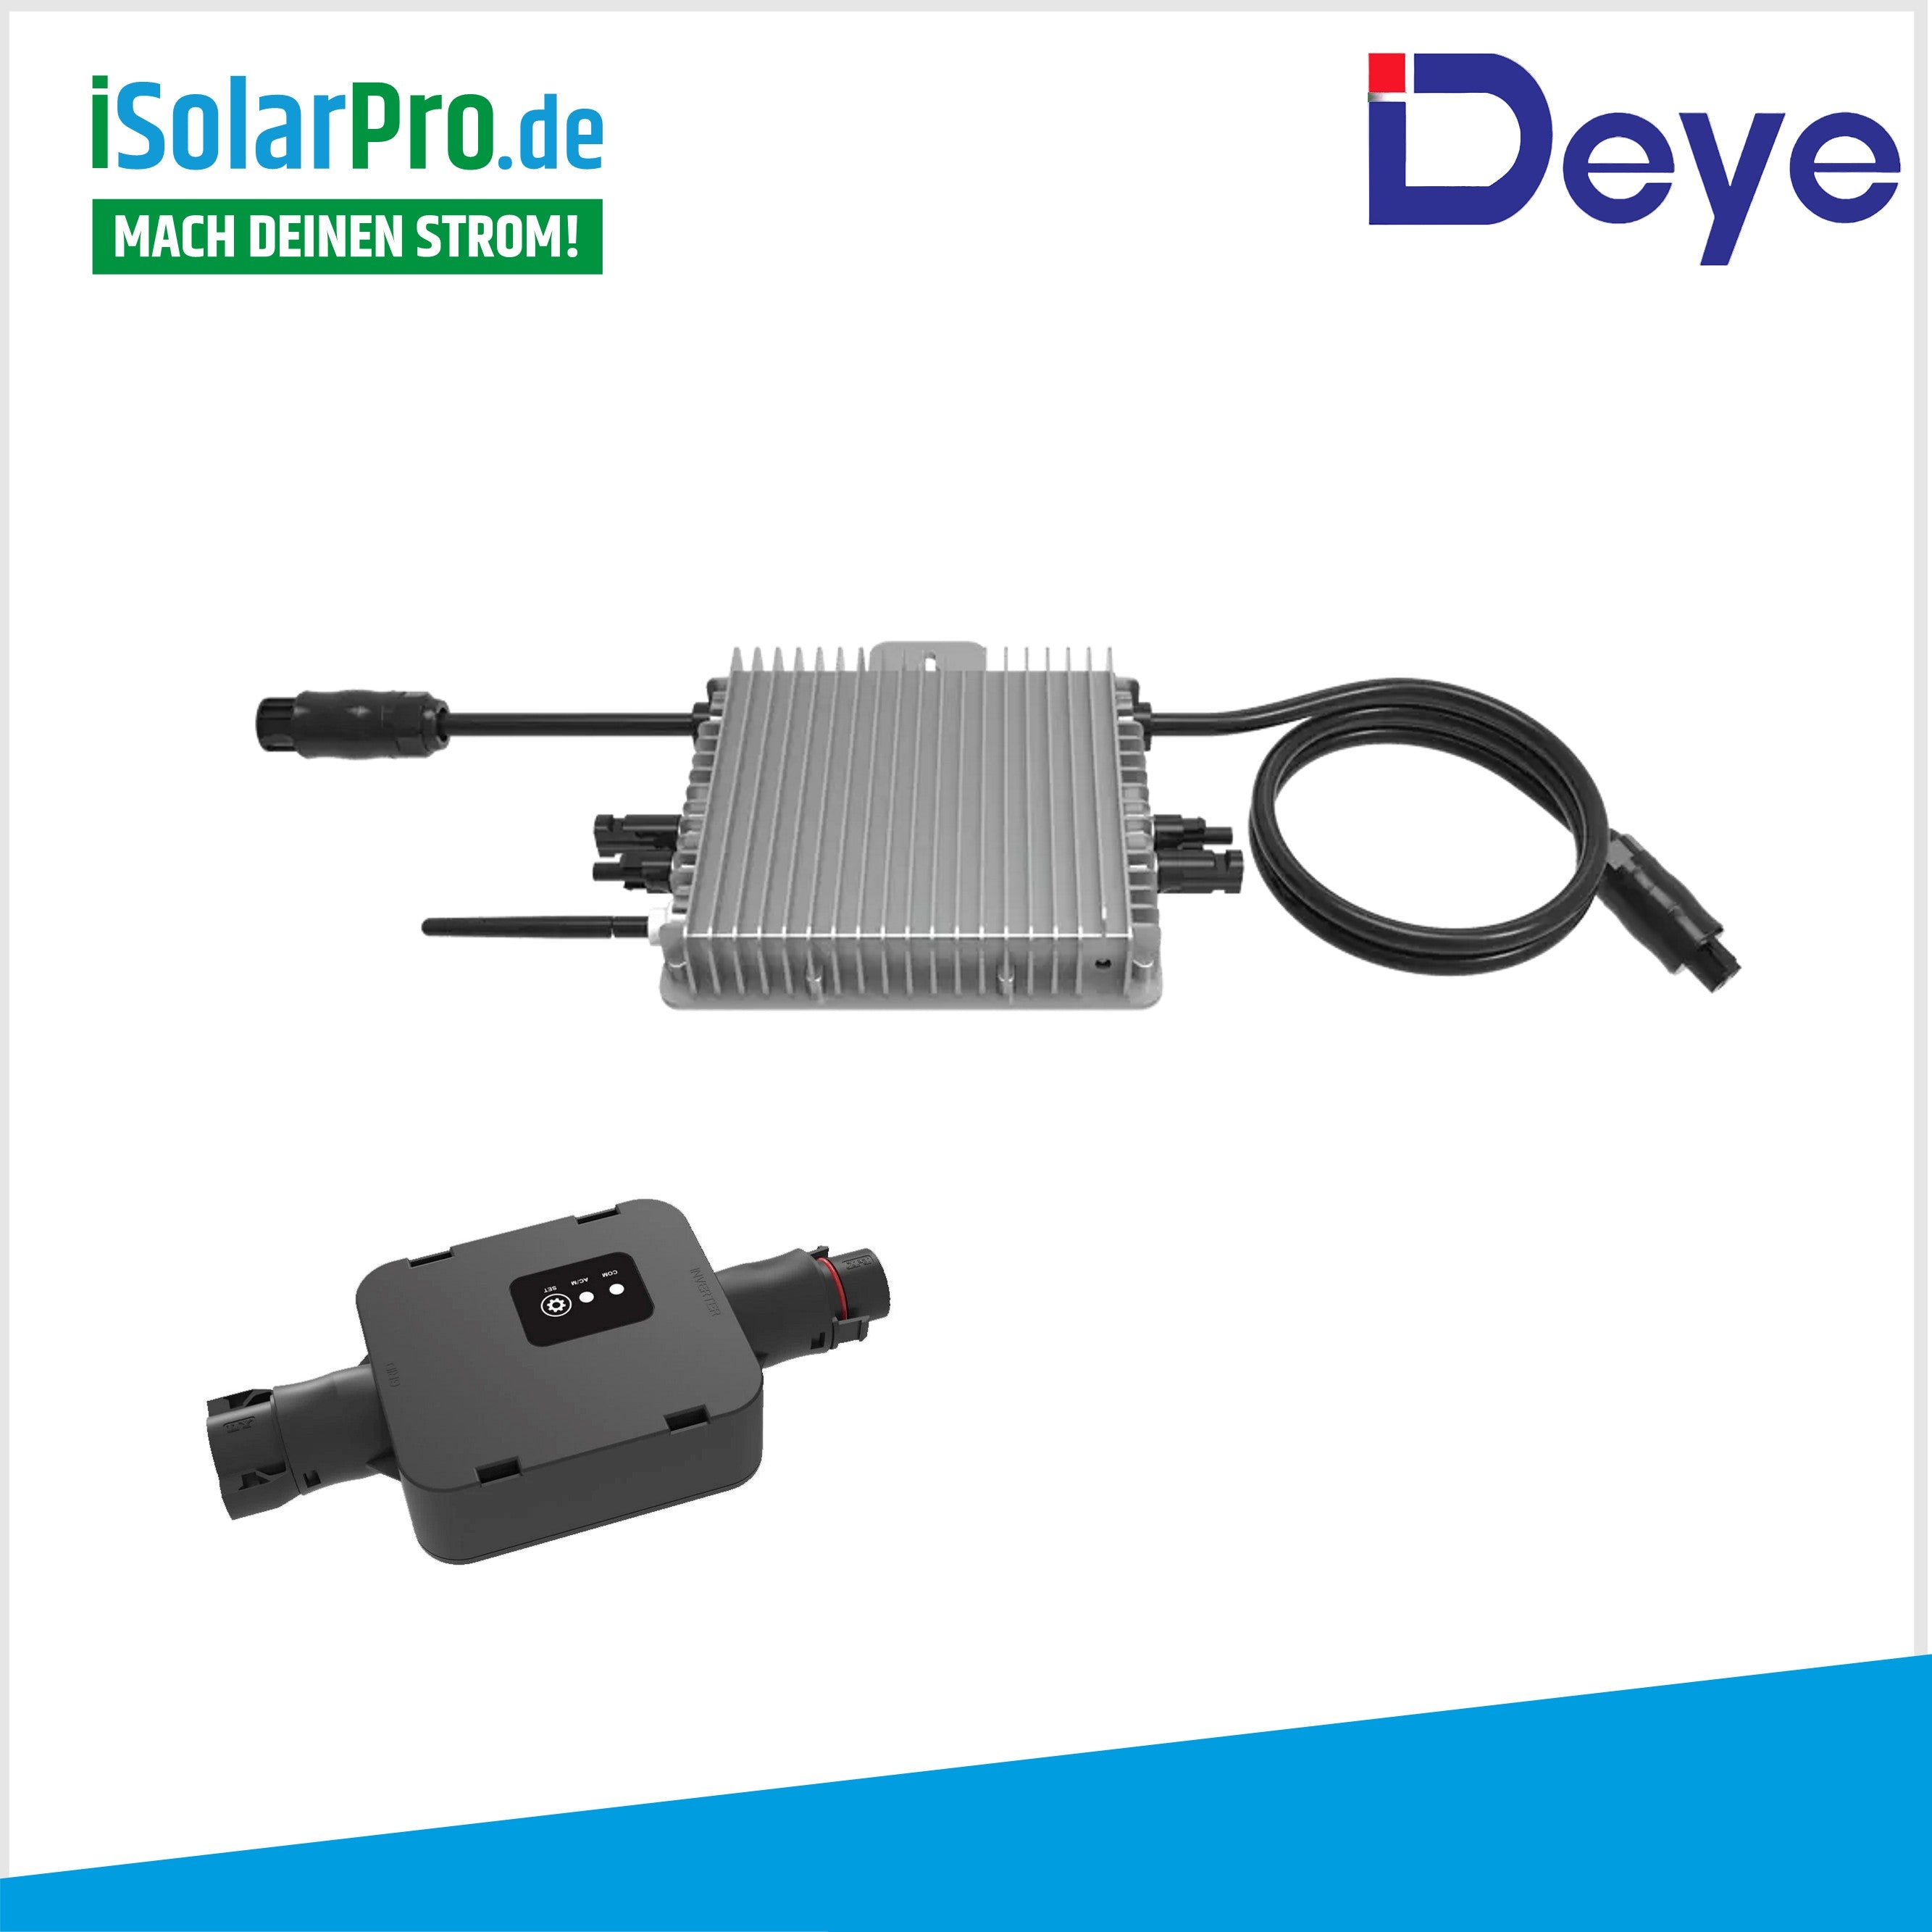 600W Deye SUN600G3-EU-230 micro inverter with WiFi